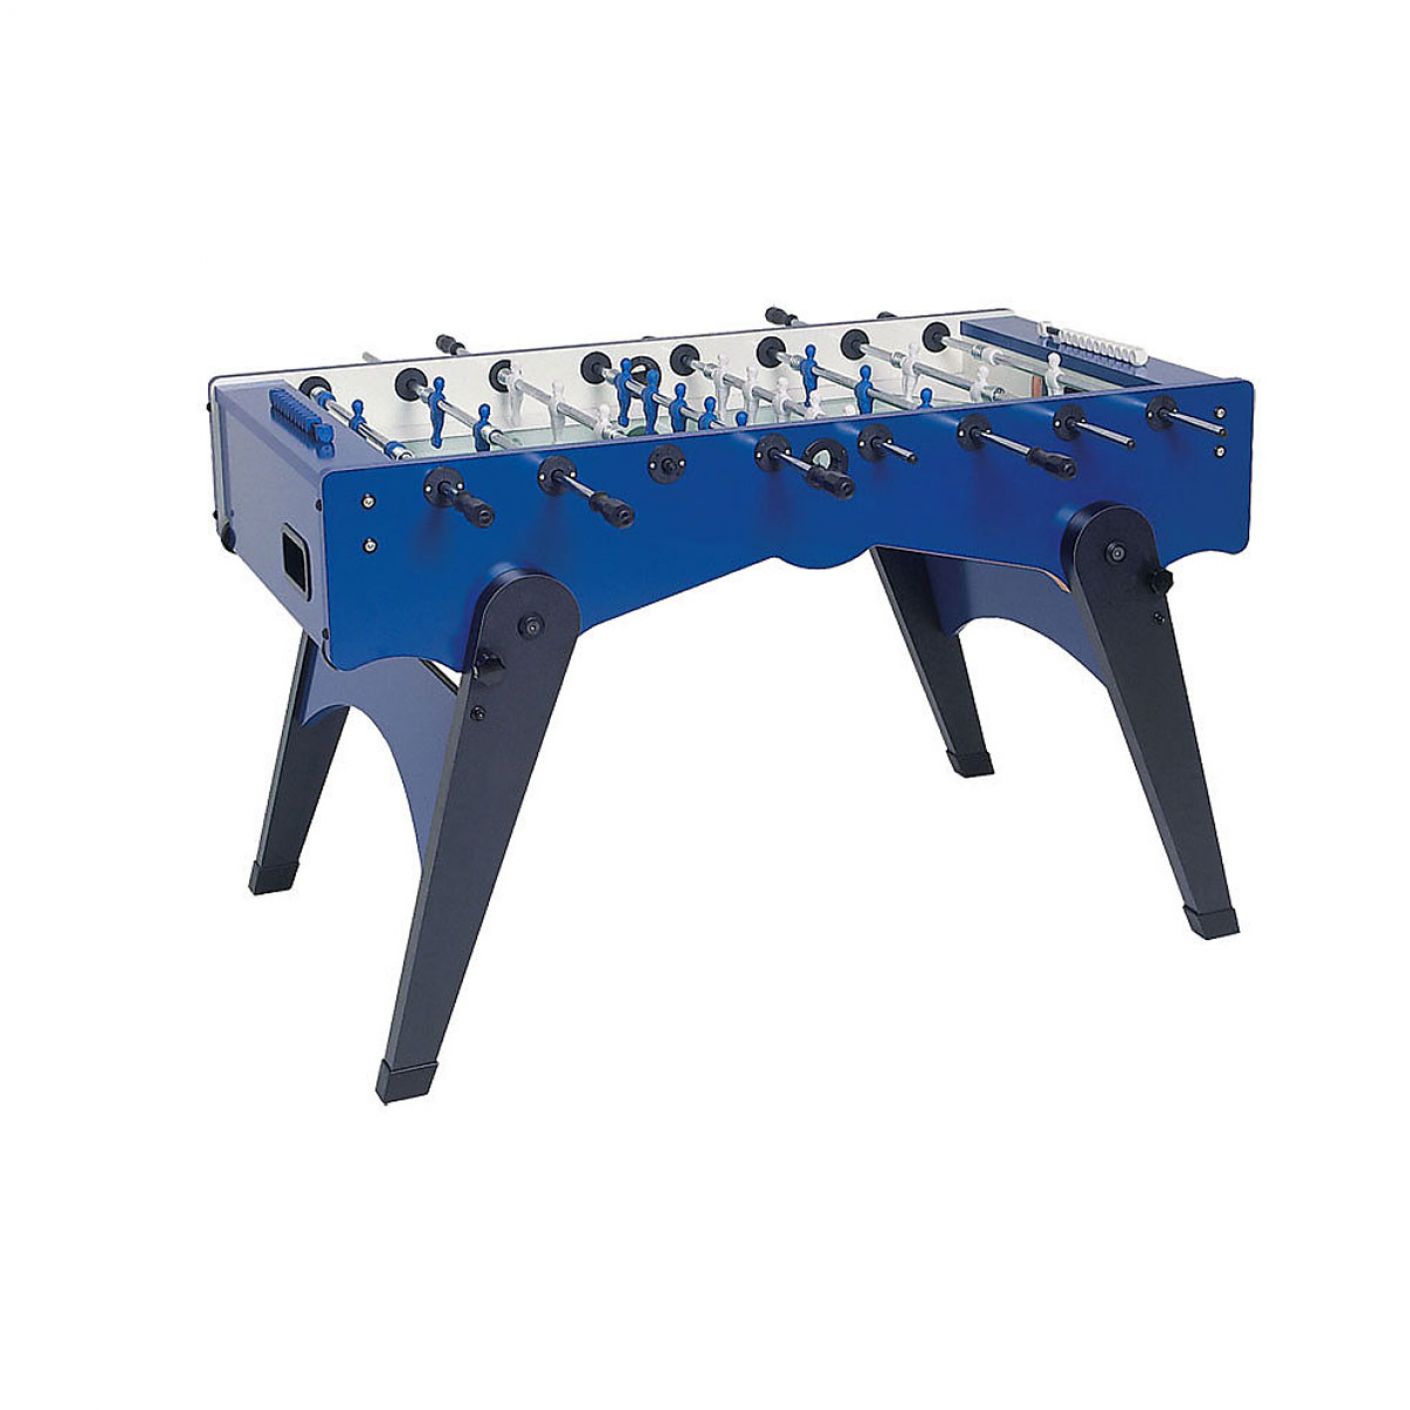 Garlando Foldy blue table football with retracting temples, folding legs